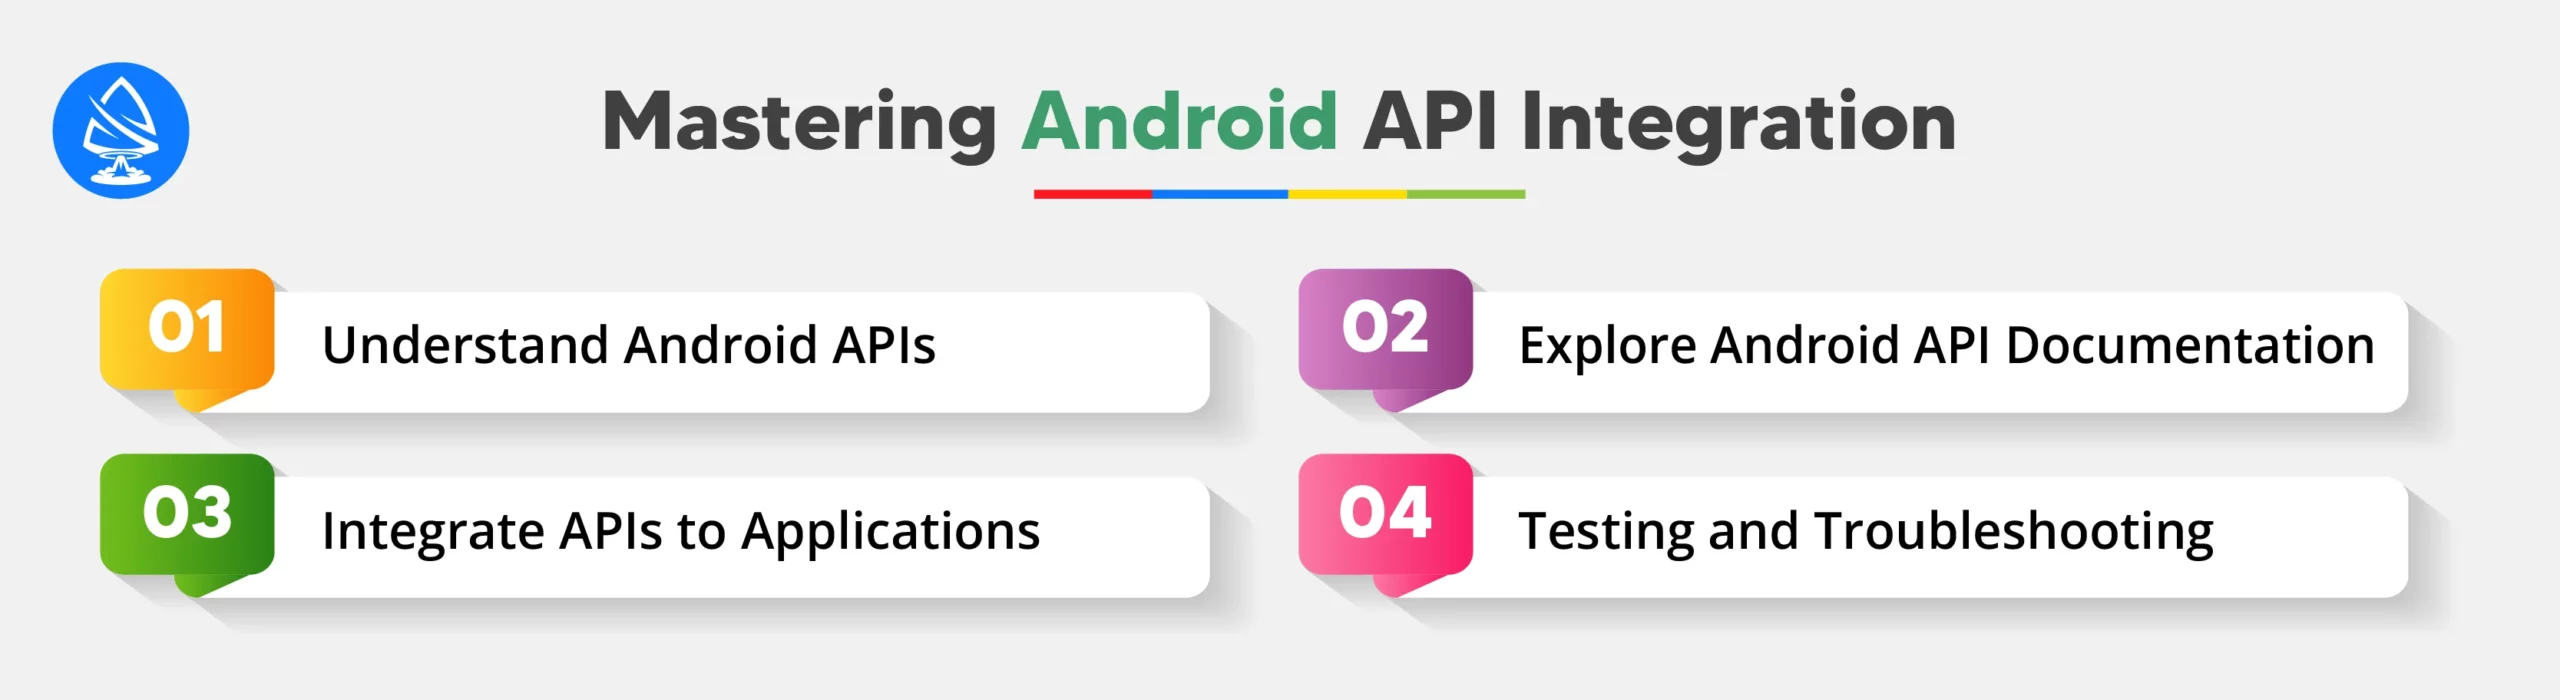 Mastering Android API Integration